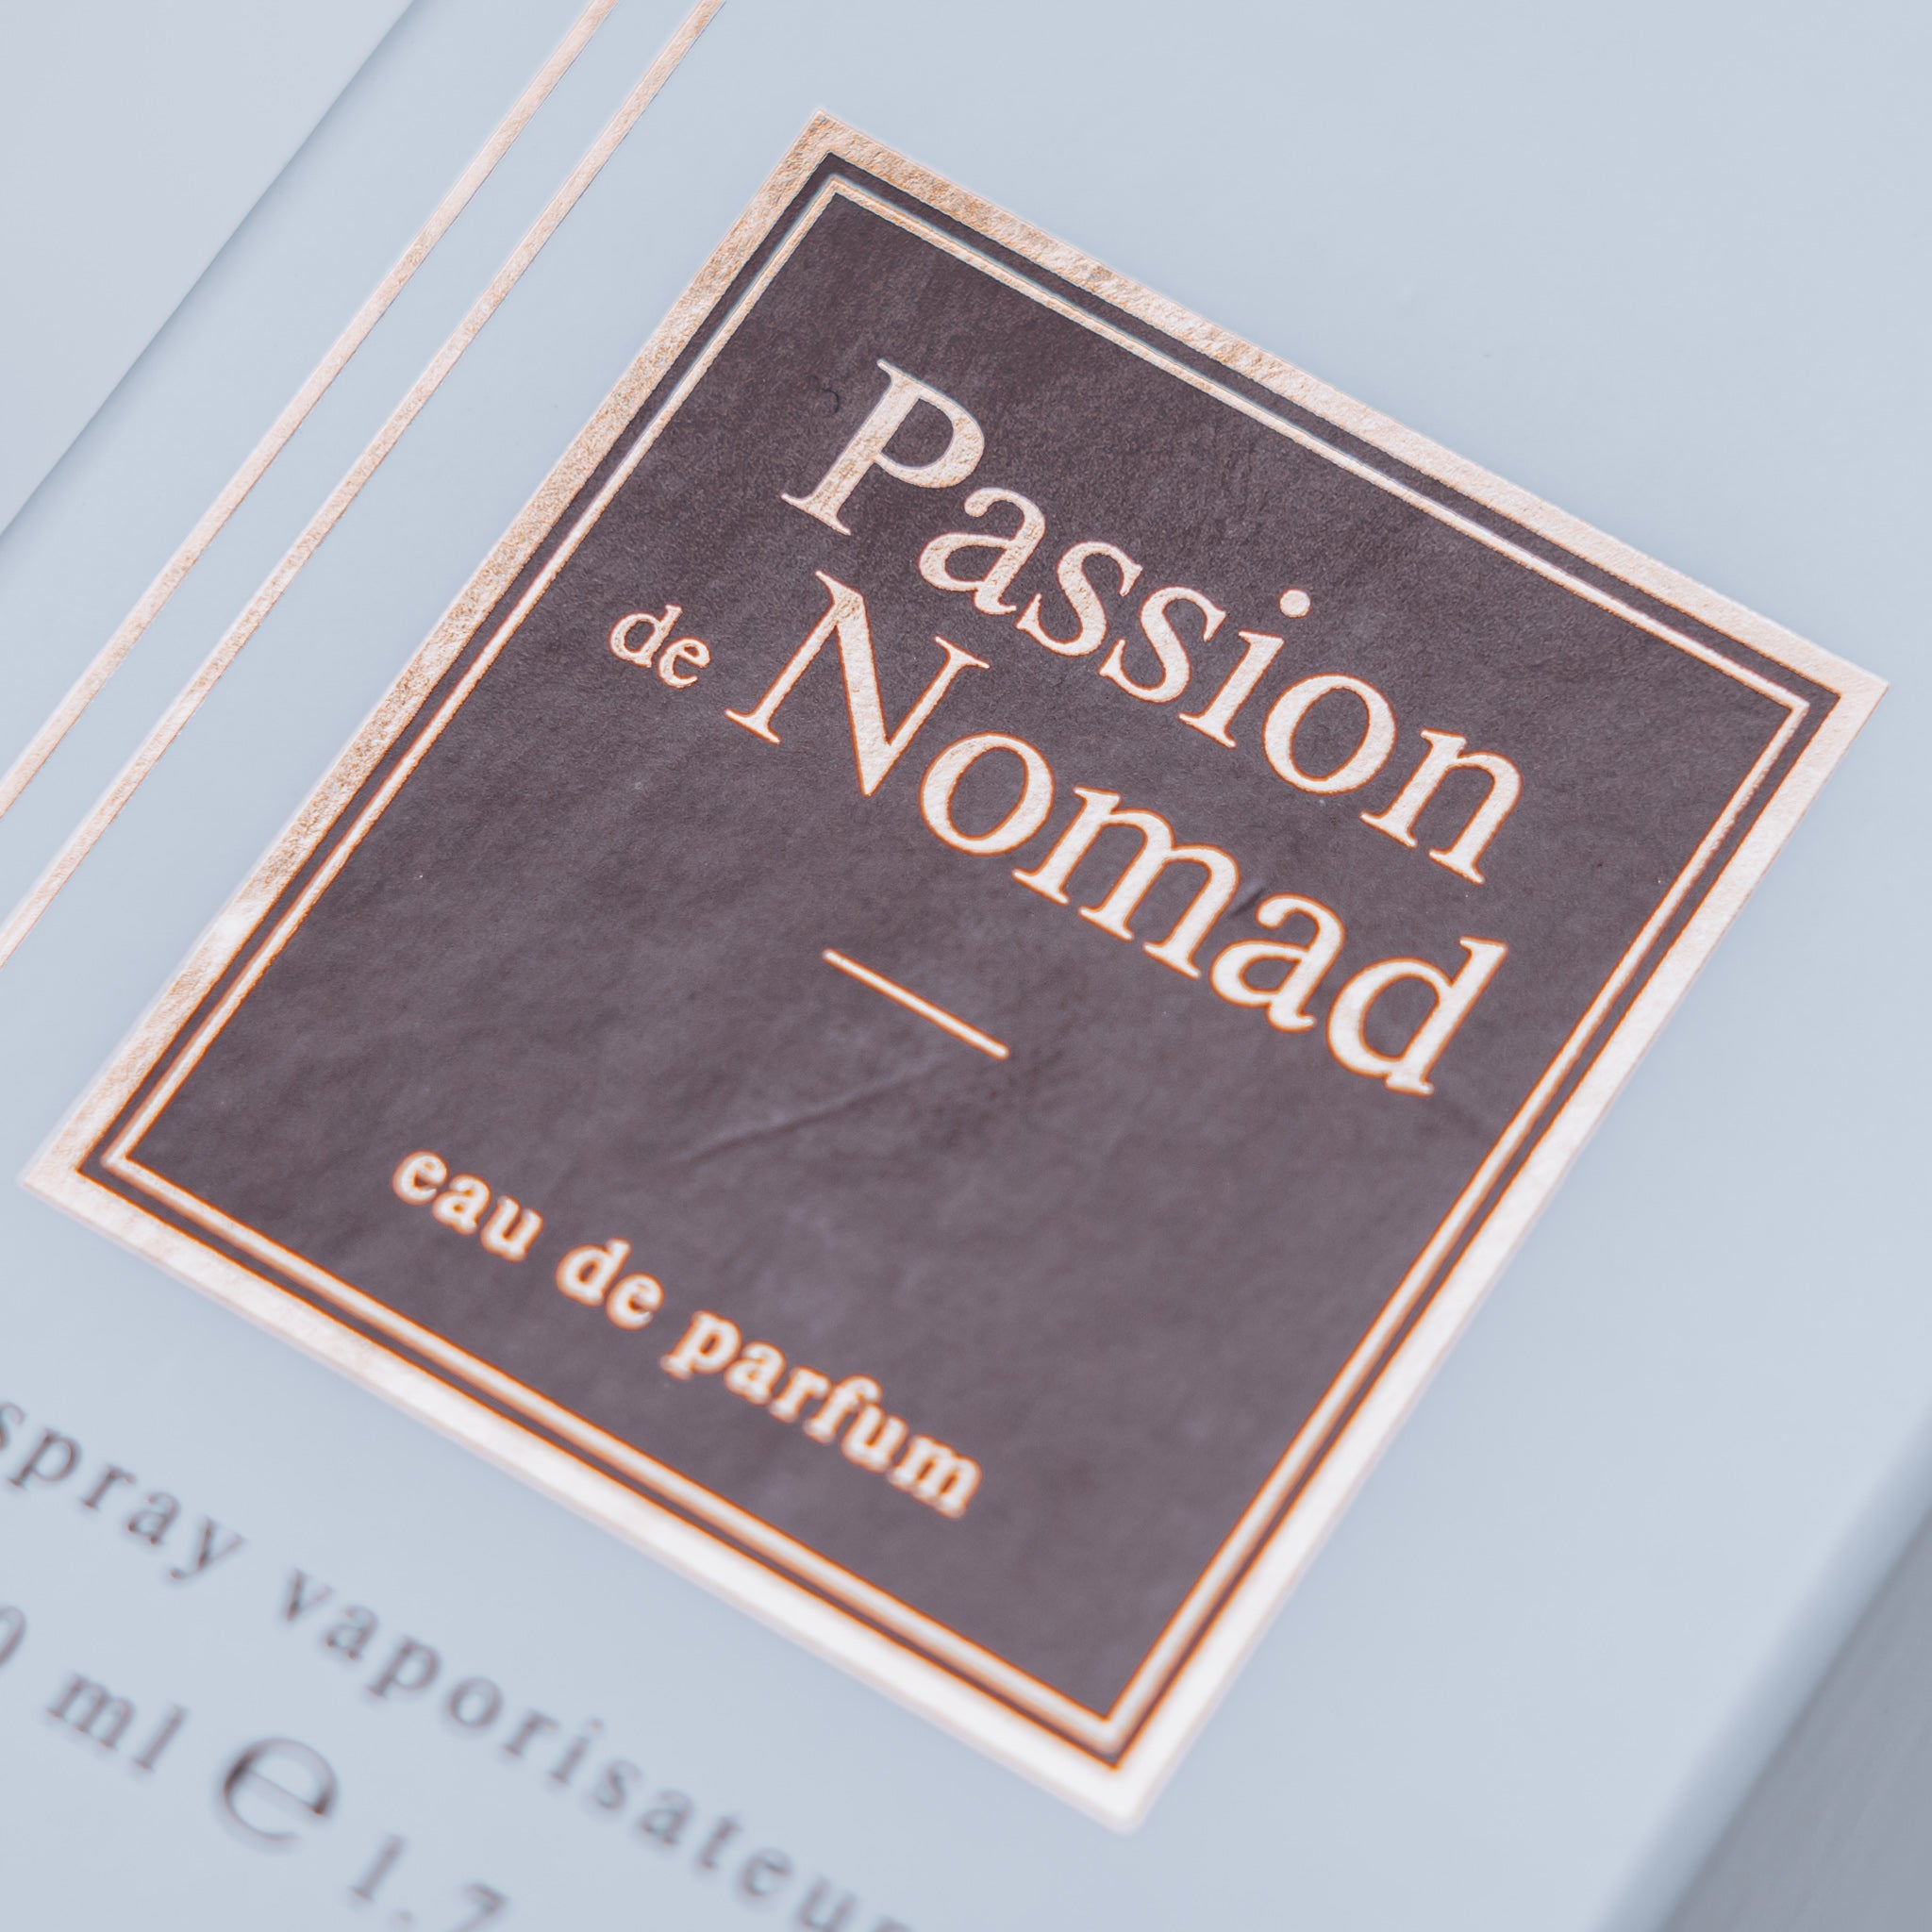 Passion de Nomad - Alternative to Ombre Nomad (Louis Vuitton) - 50ml –  Amaari Parfum